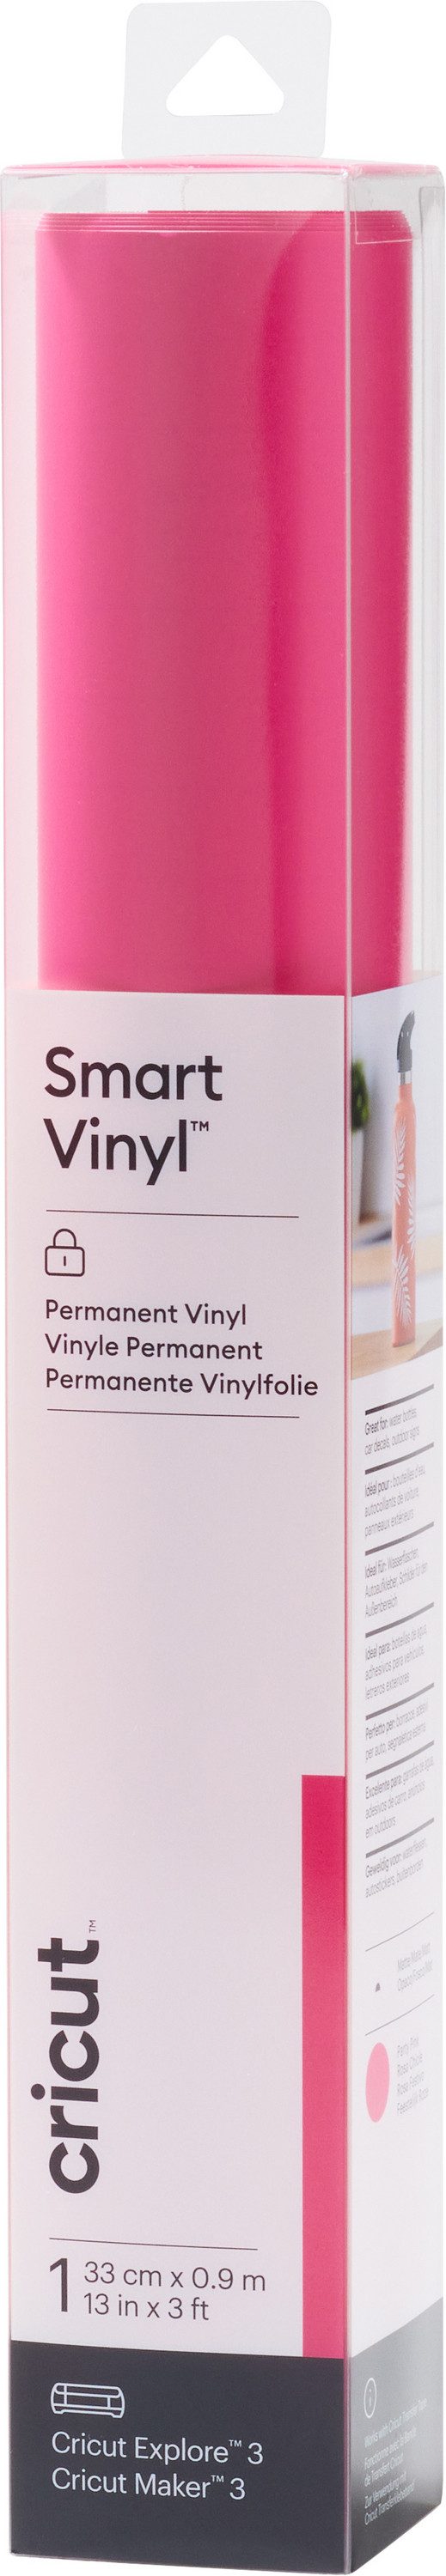 Cricut Dekorationsfolie Vinylfolie Smart Vinyl Permanent, selbstklebend 90 cm x 33 cm